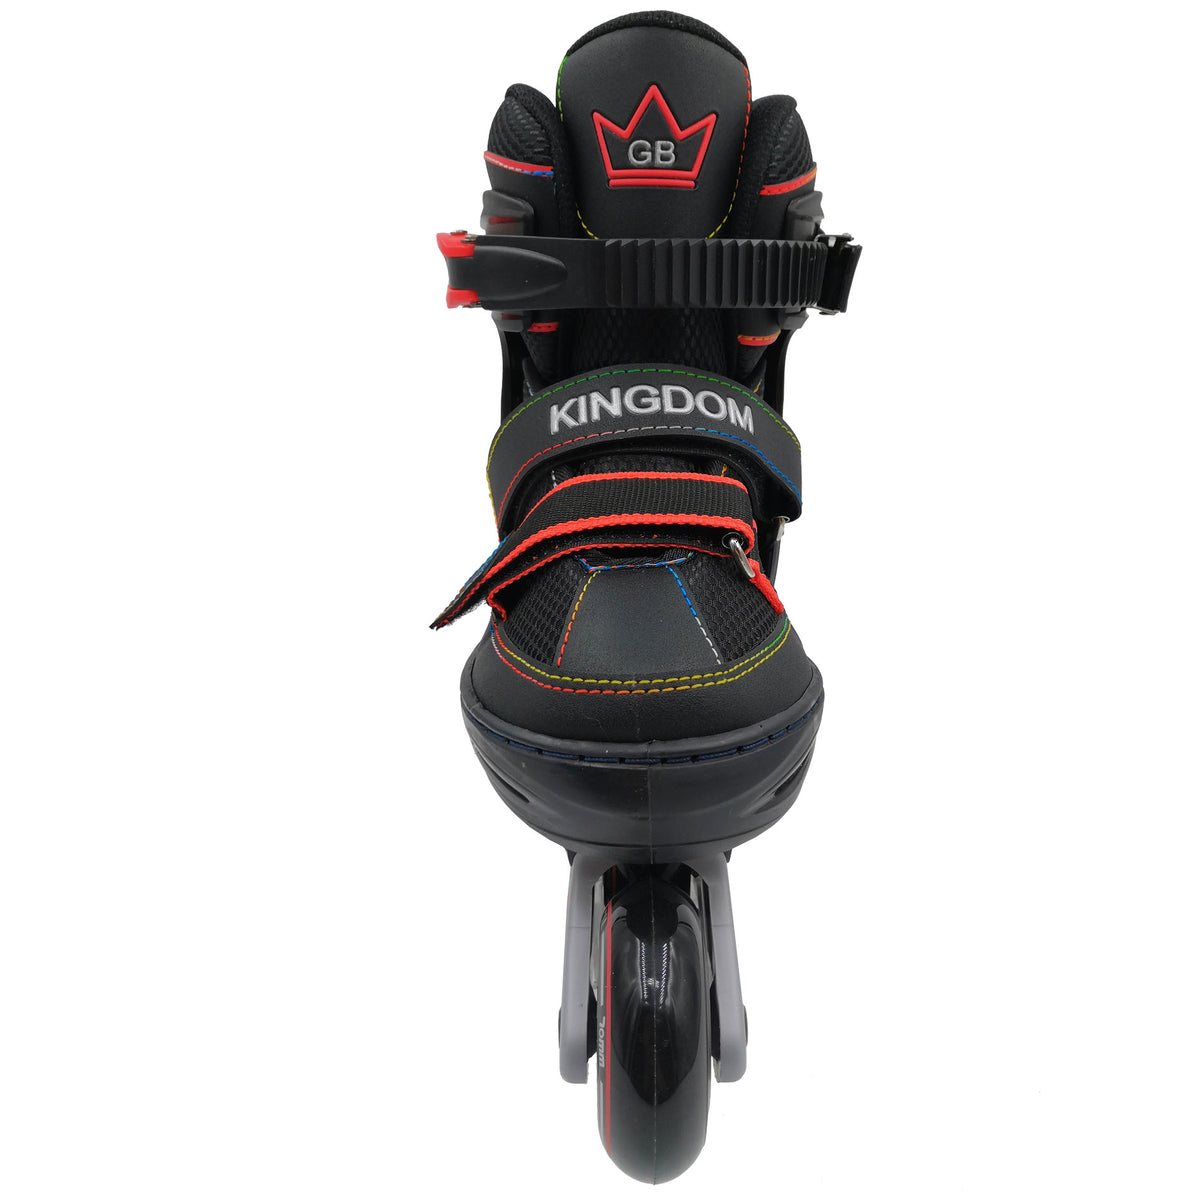 Kingdom GB Metro Flash Adjustable Inline Roller Skates Illuminating Light up Wheels Black Red